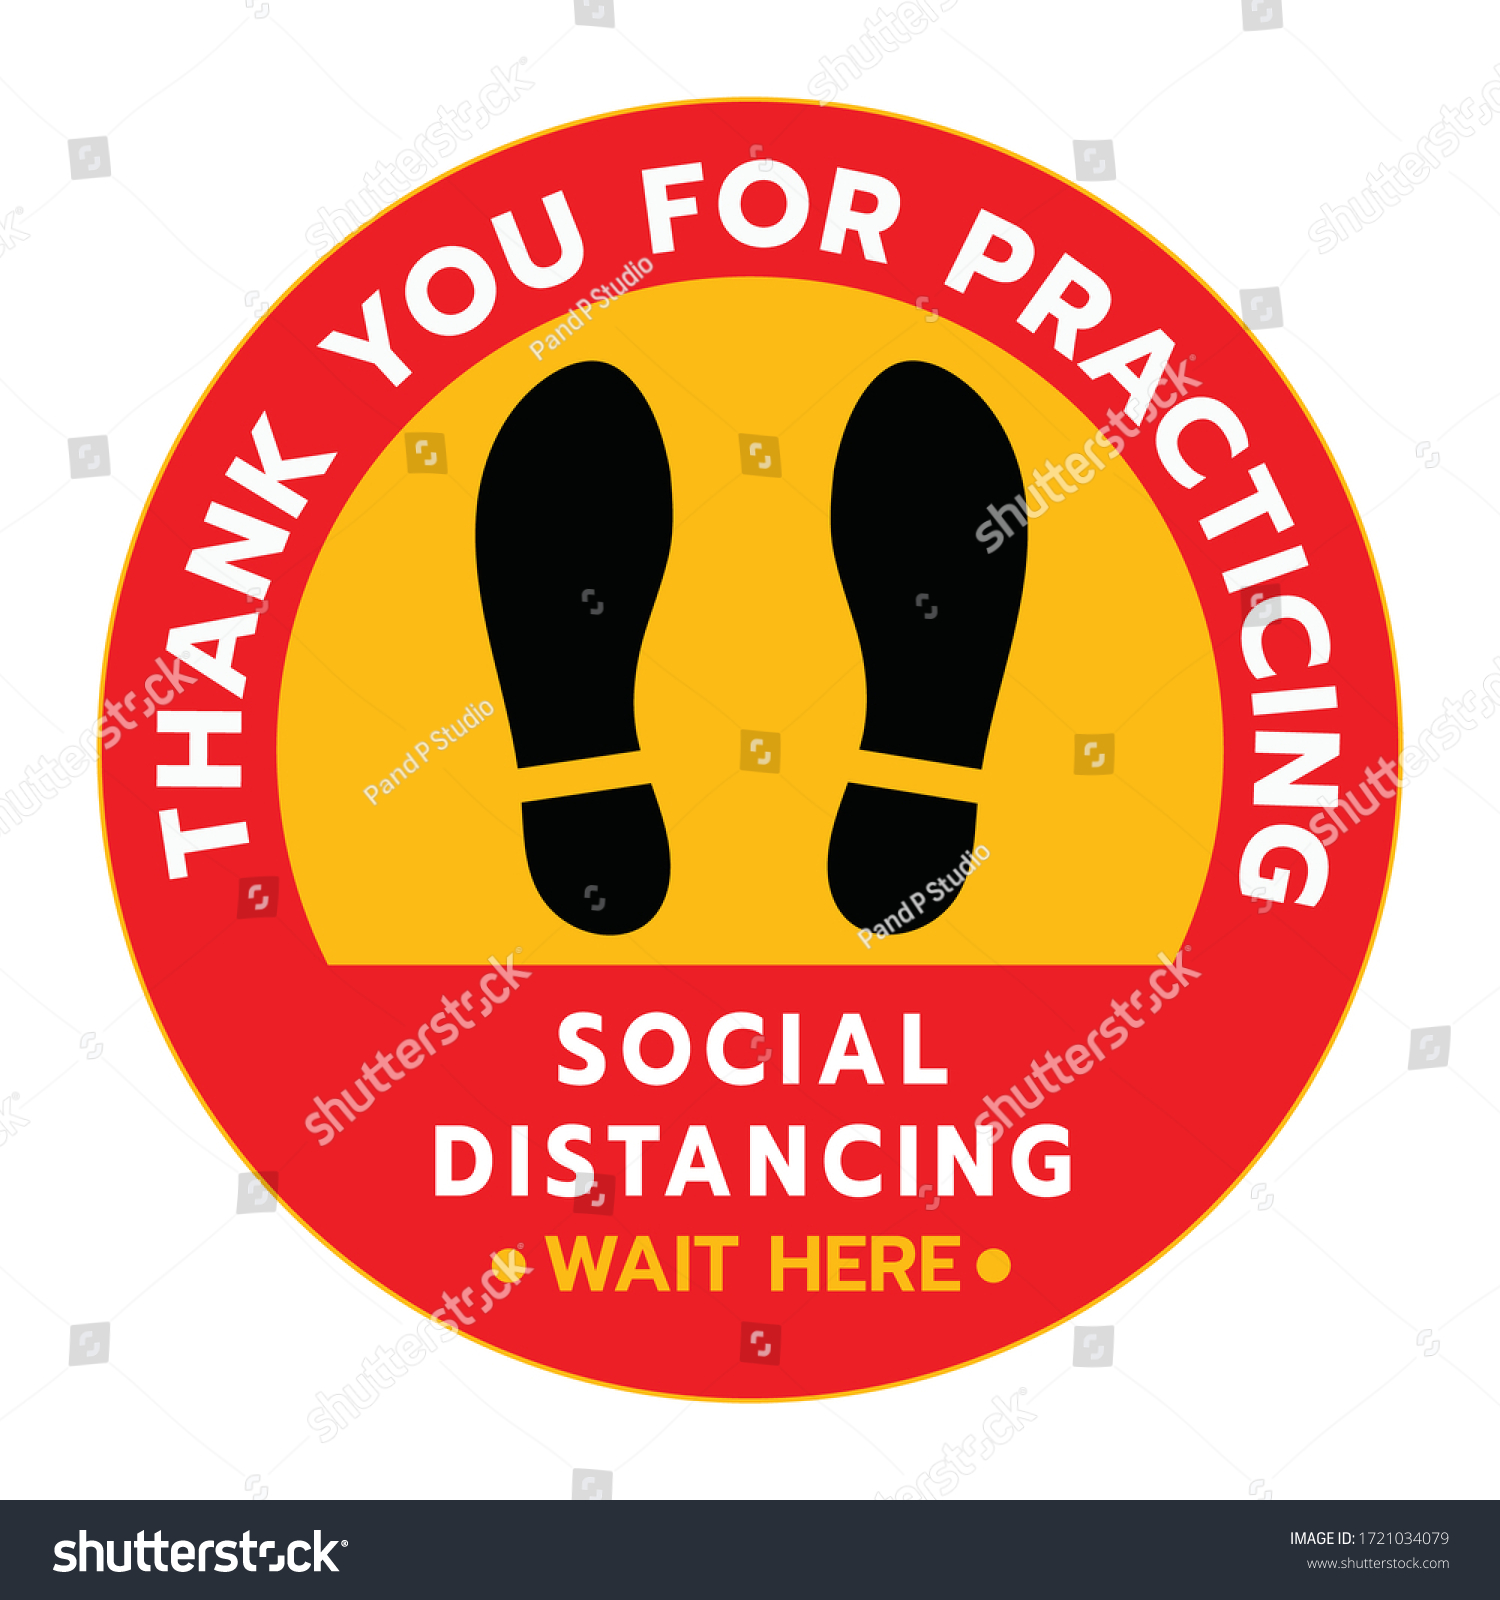 Business Sign Social Distance Sticker COV19 KEEP A SAFE DISTANCE APART 